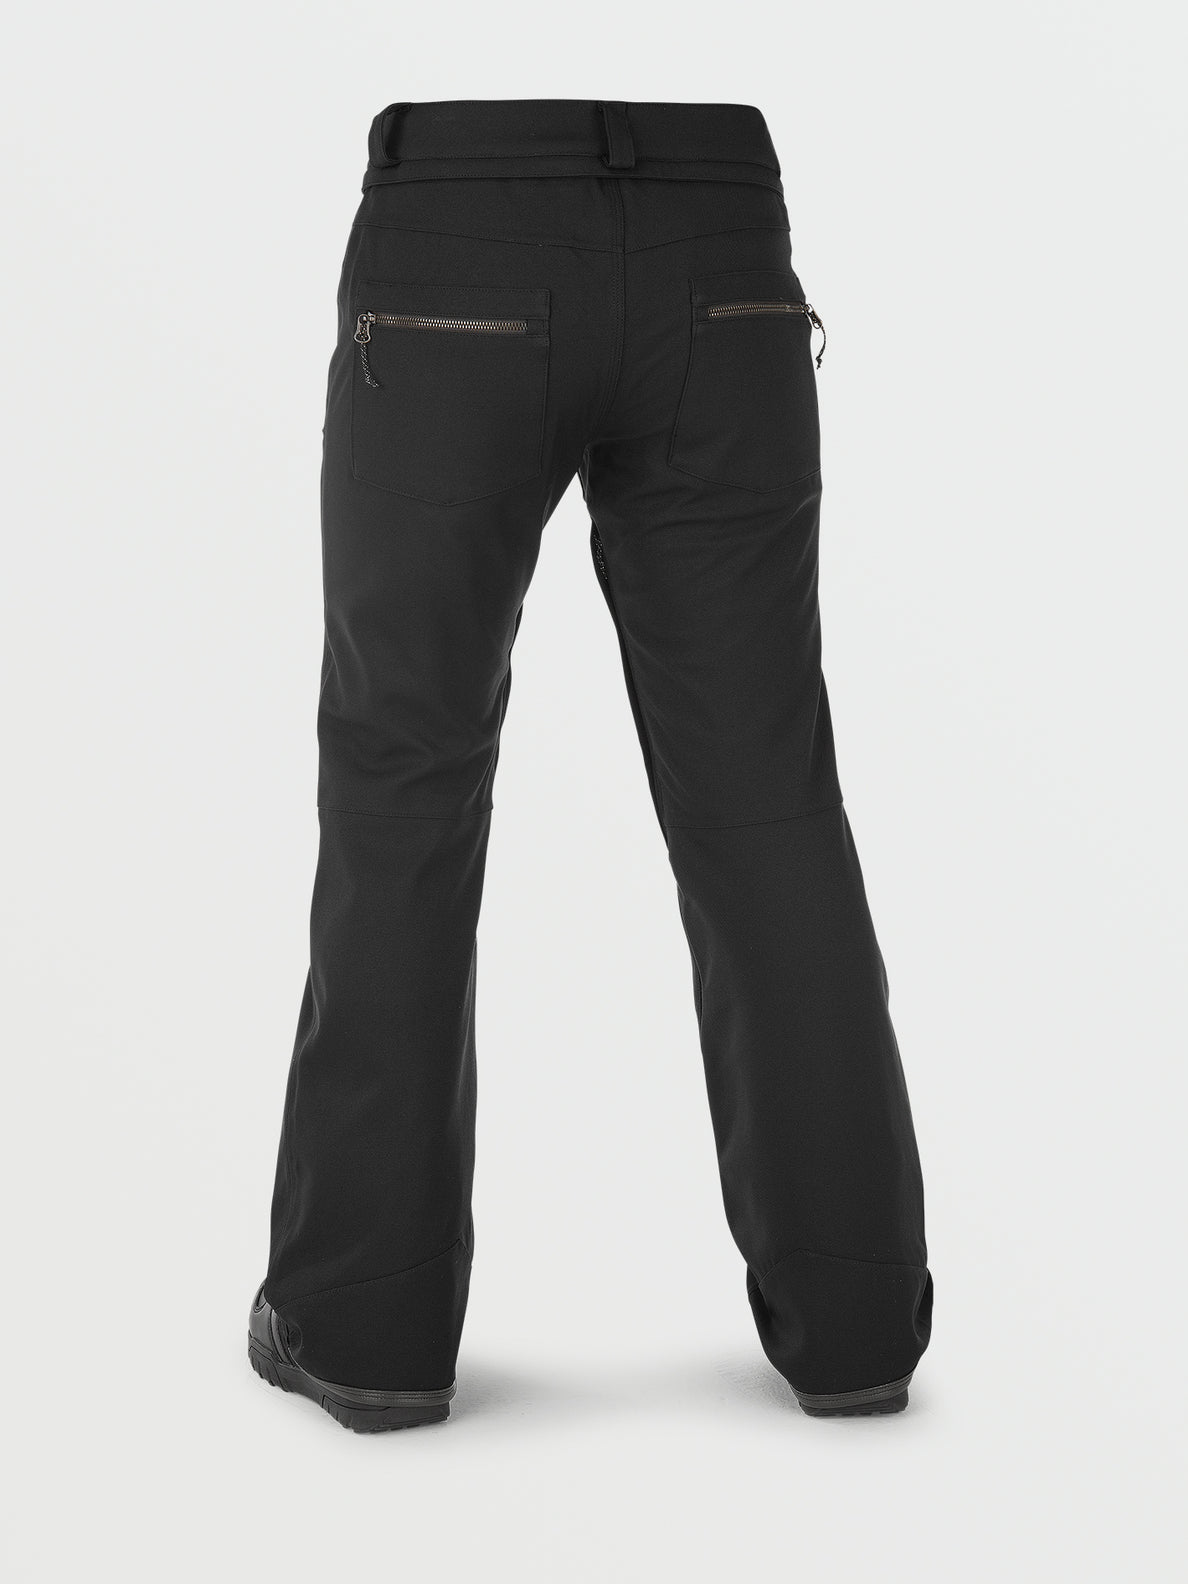 Womens Species Stretch Pants - Black (H1352303_BLK) [6]